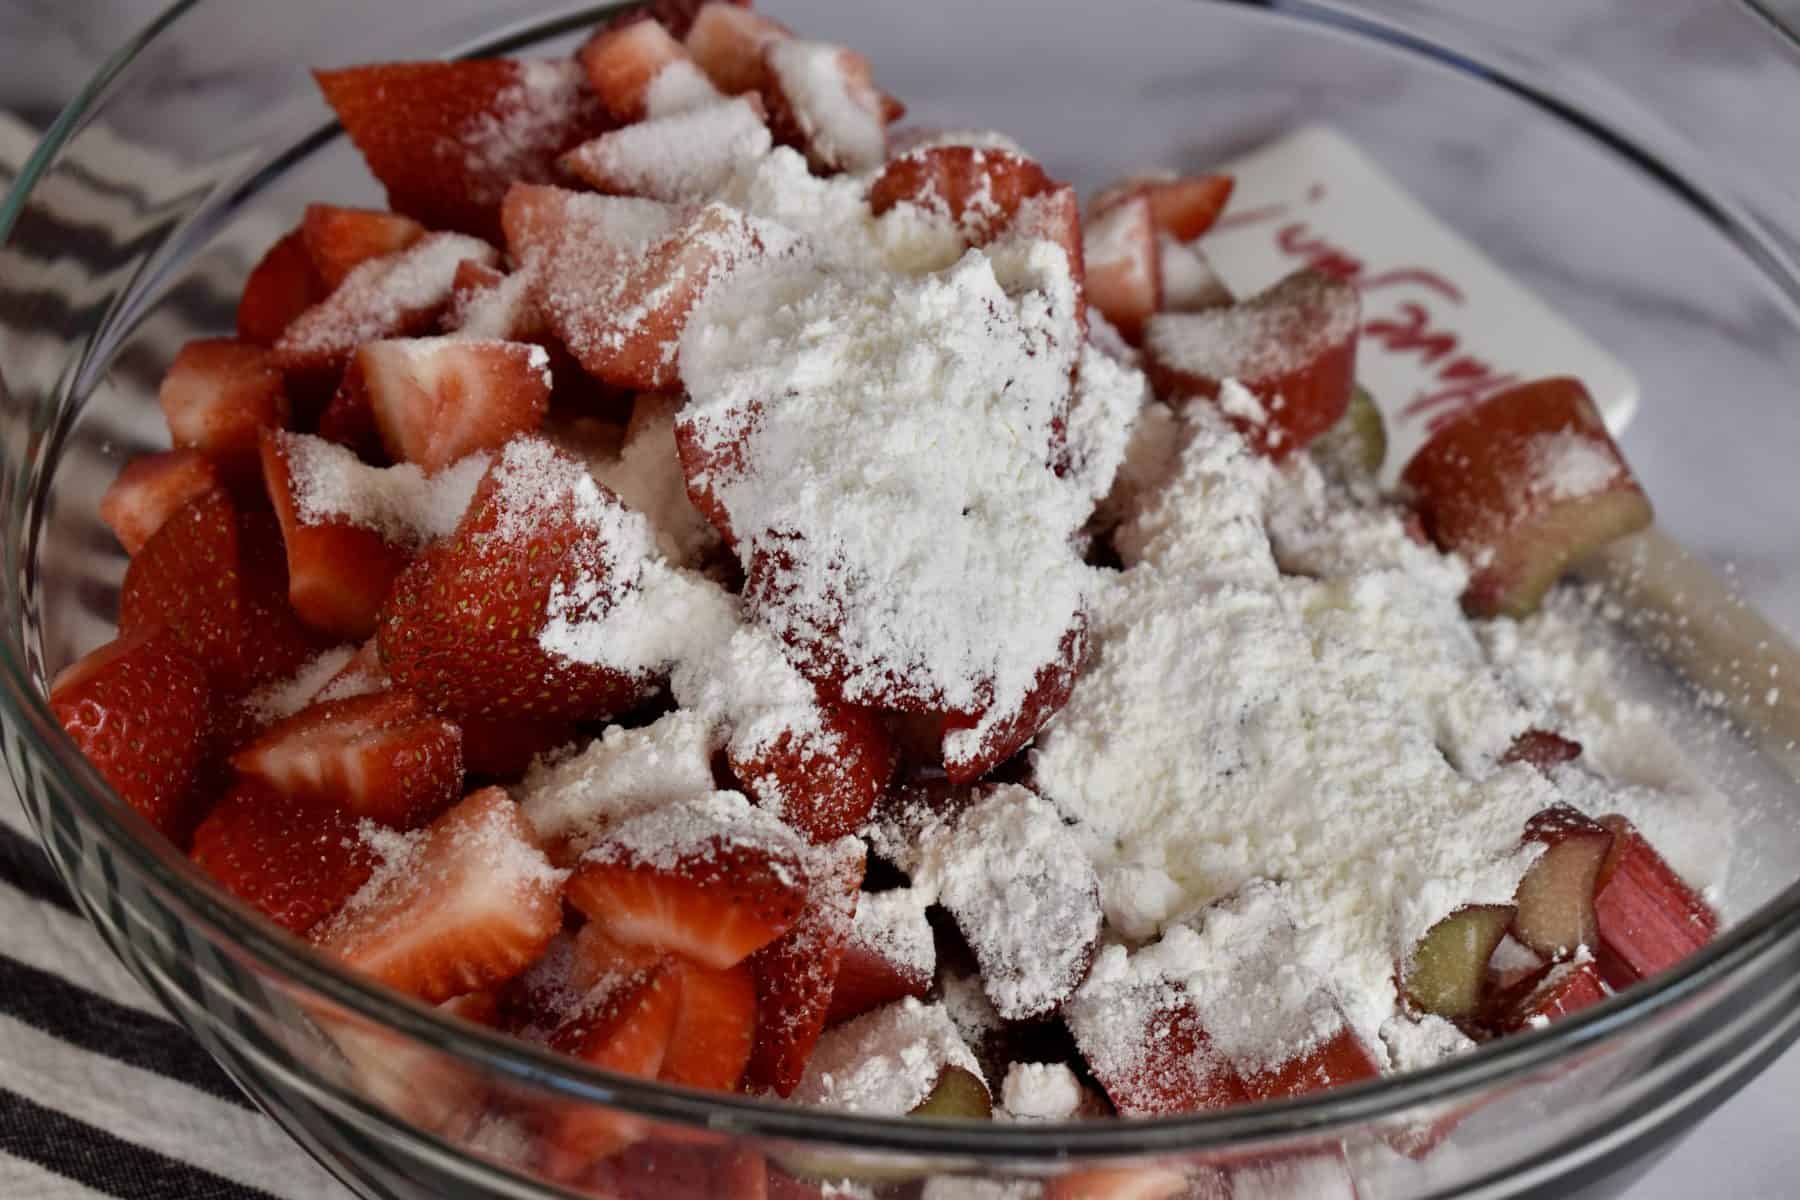 Rhubarb, strawberries, cornstarch, sugar, and salt in a glass mixing bowl. 